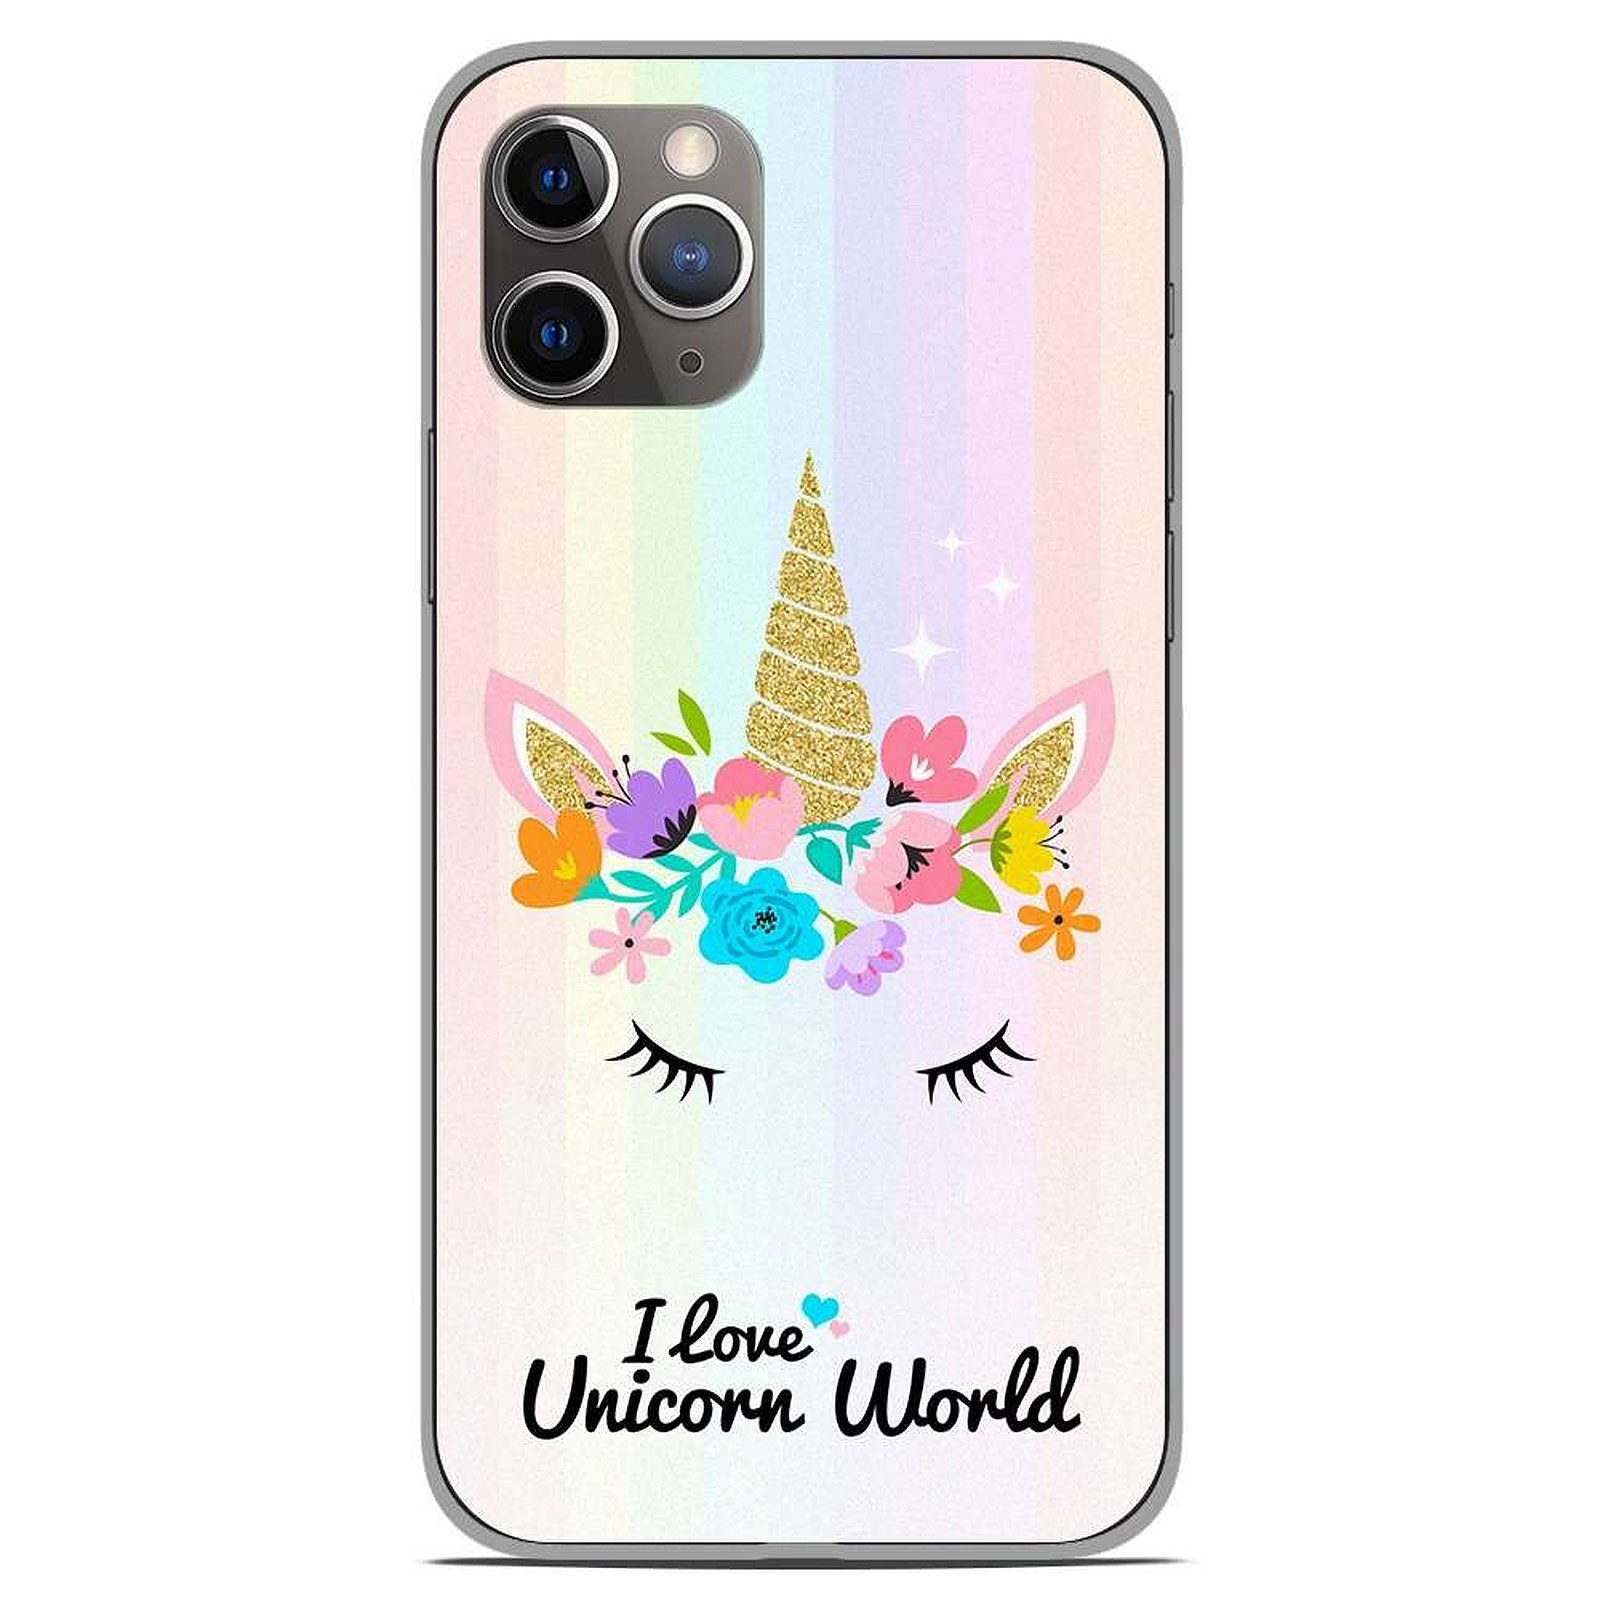 1001 Coques Coque silicone gel Apple iPhone 11 Pro motif Unicorn World - Coque telephone 1001Coques